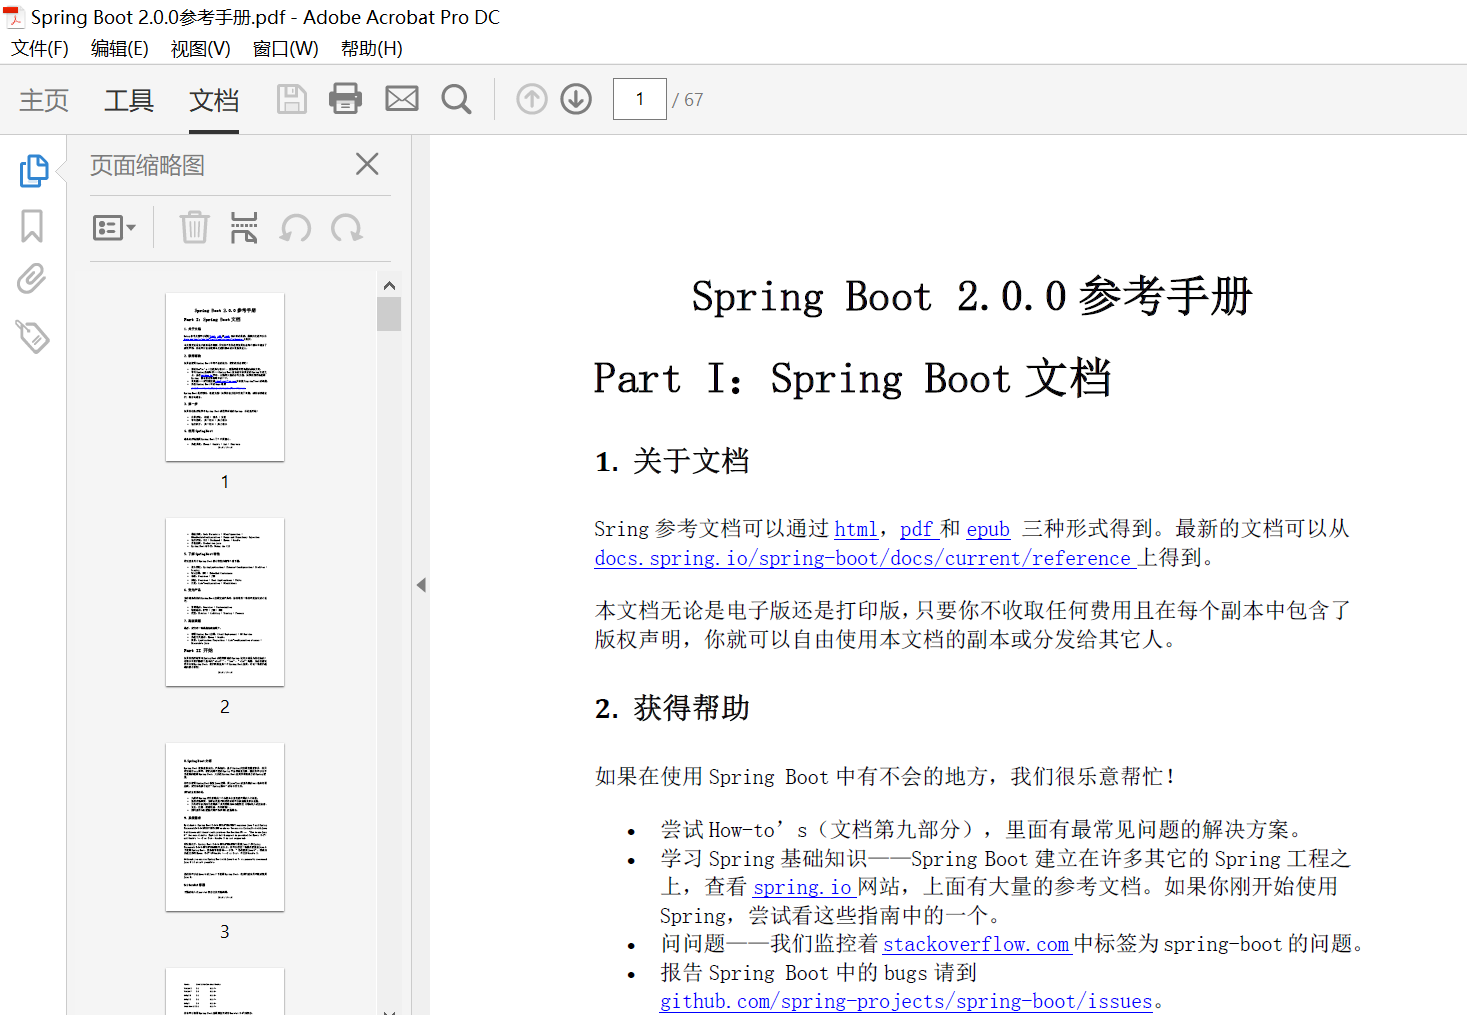 SpringBoot2.0.0参考手册